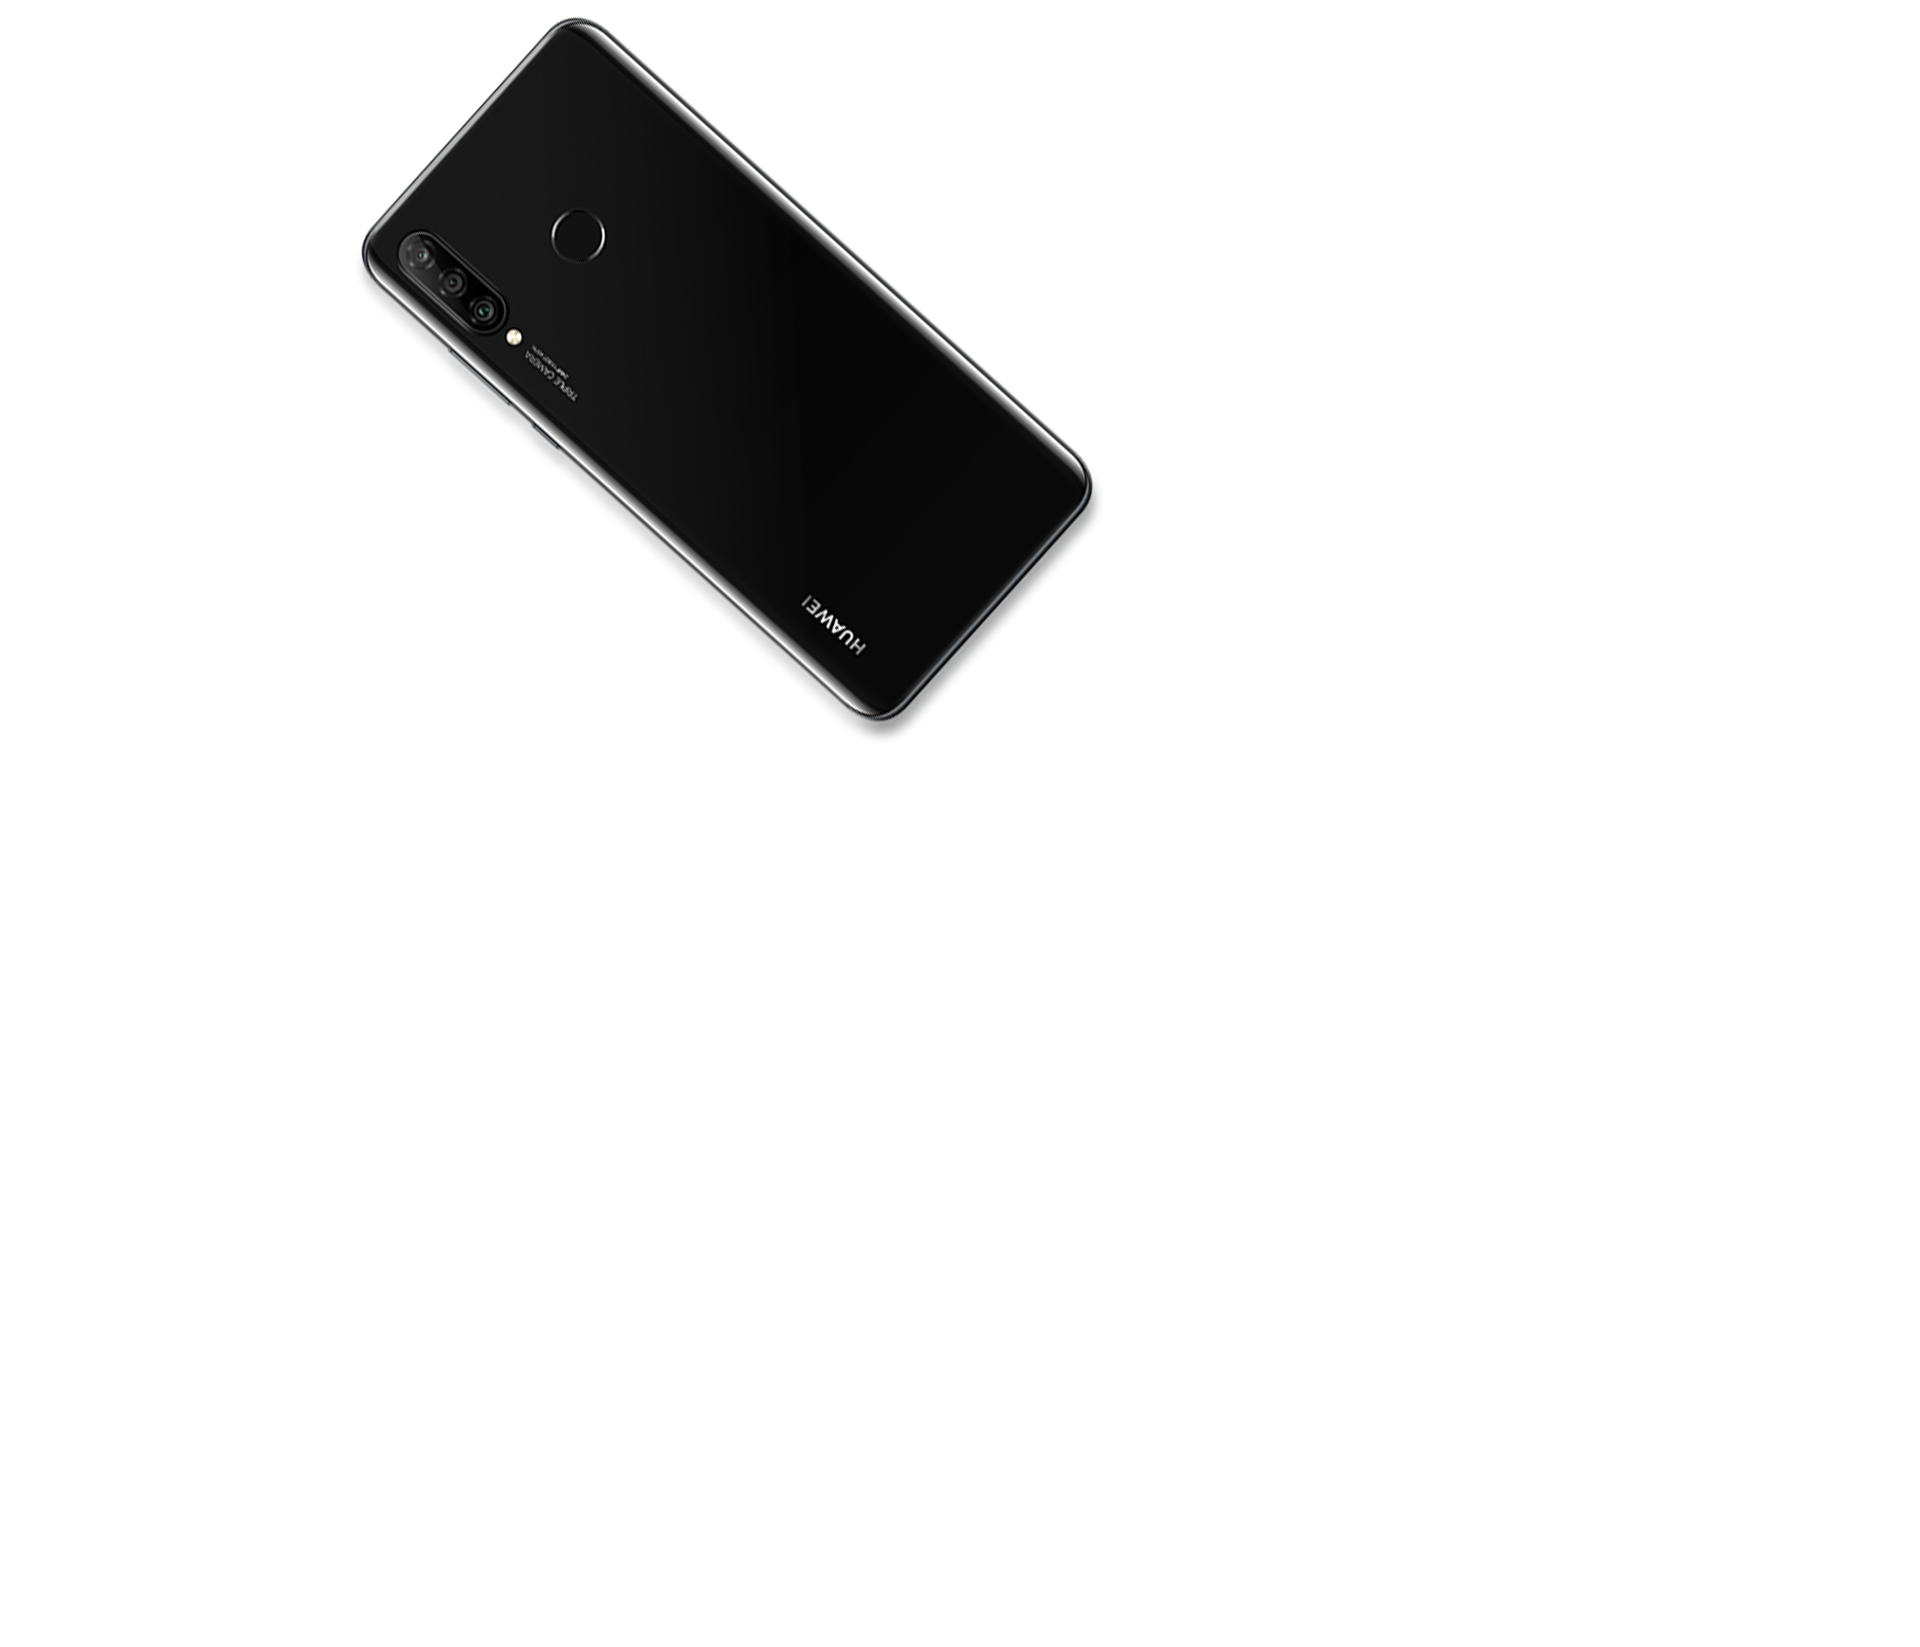 Huawei P30 lite Slim 3D Curved Glass Design